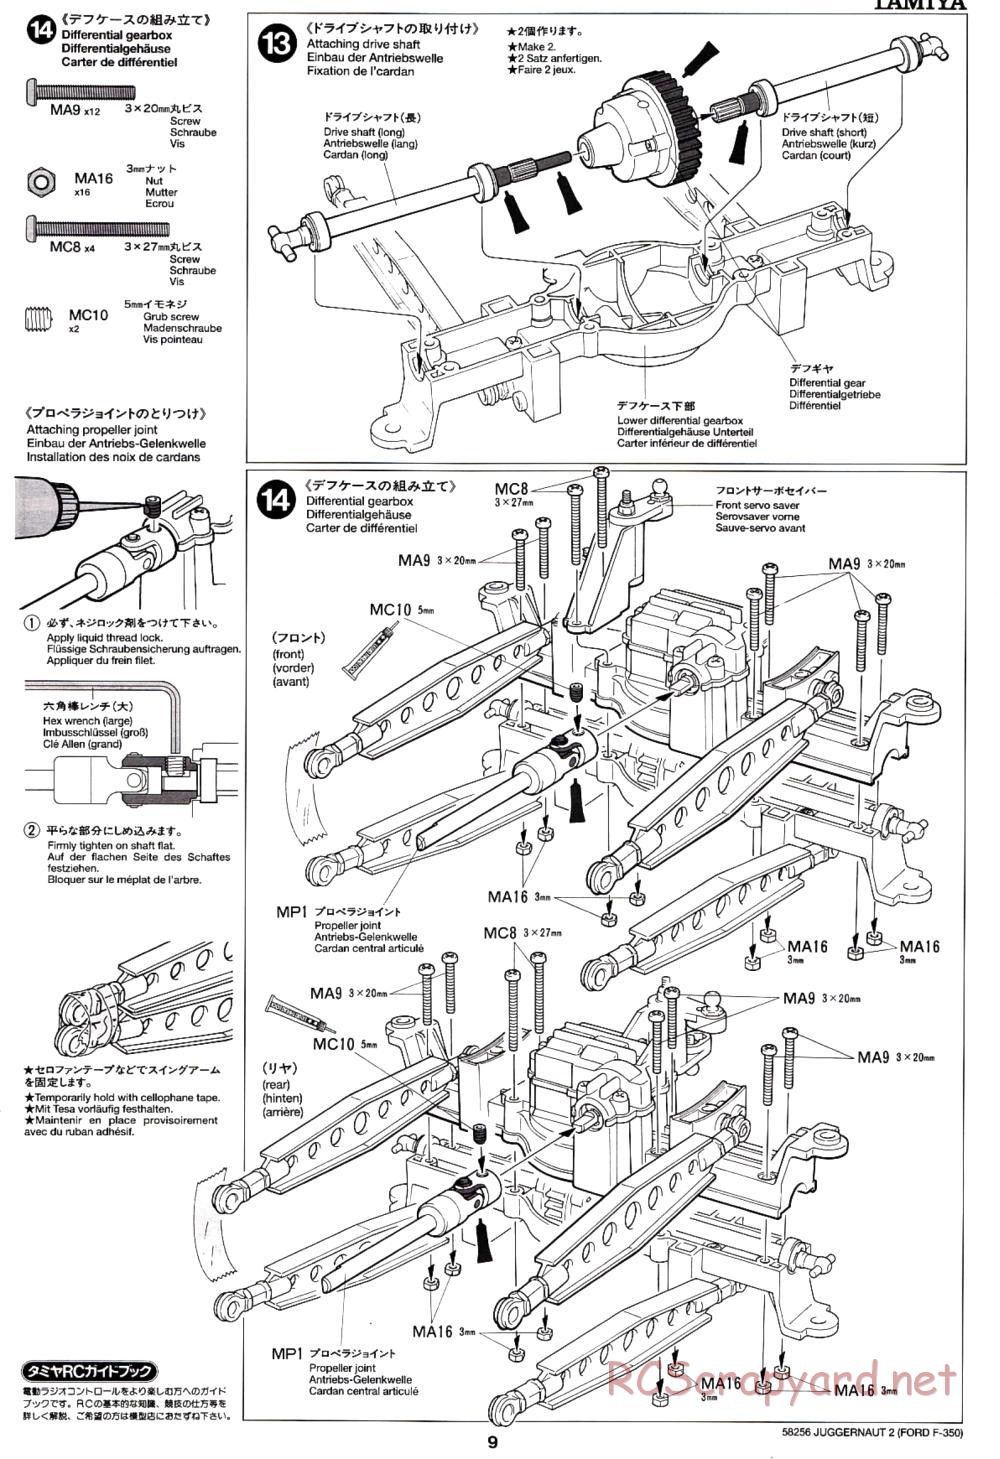 Tamiya - Juggernaut 2 Chassis - Manual - Page 9